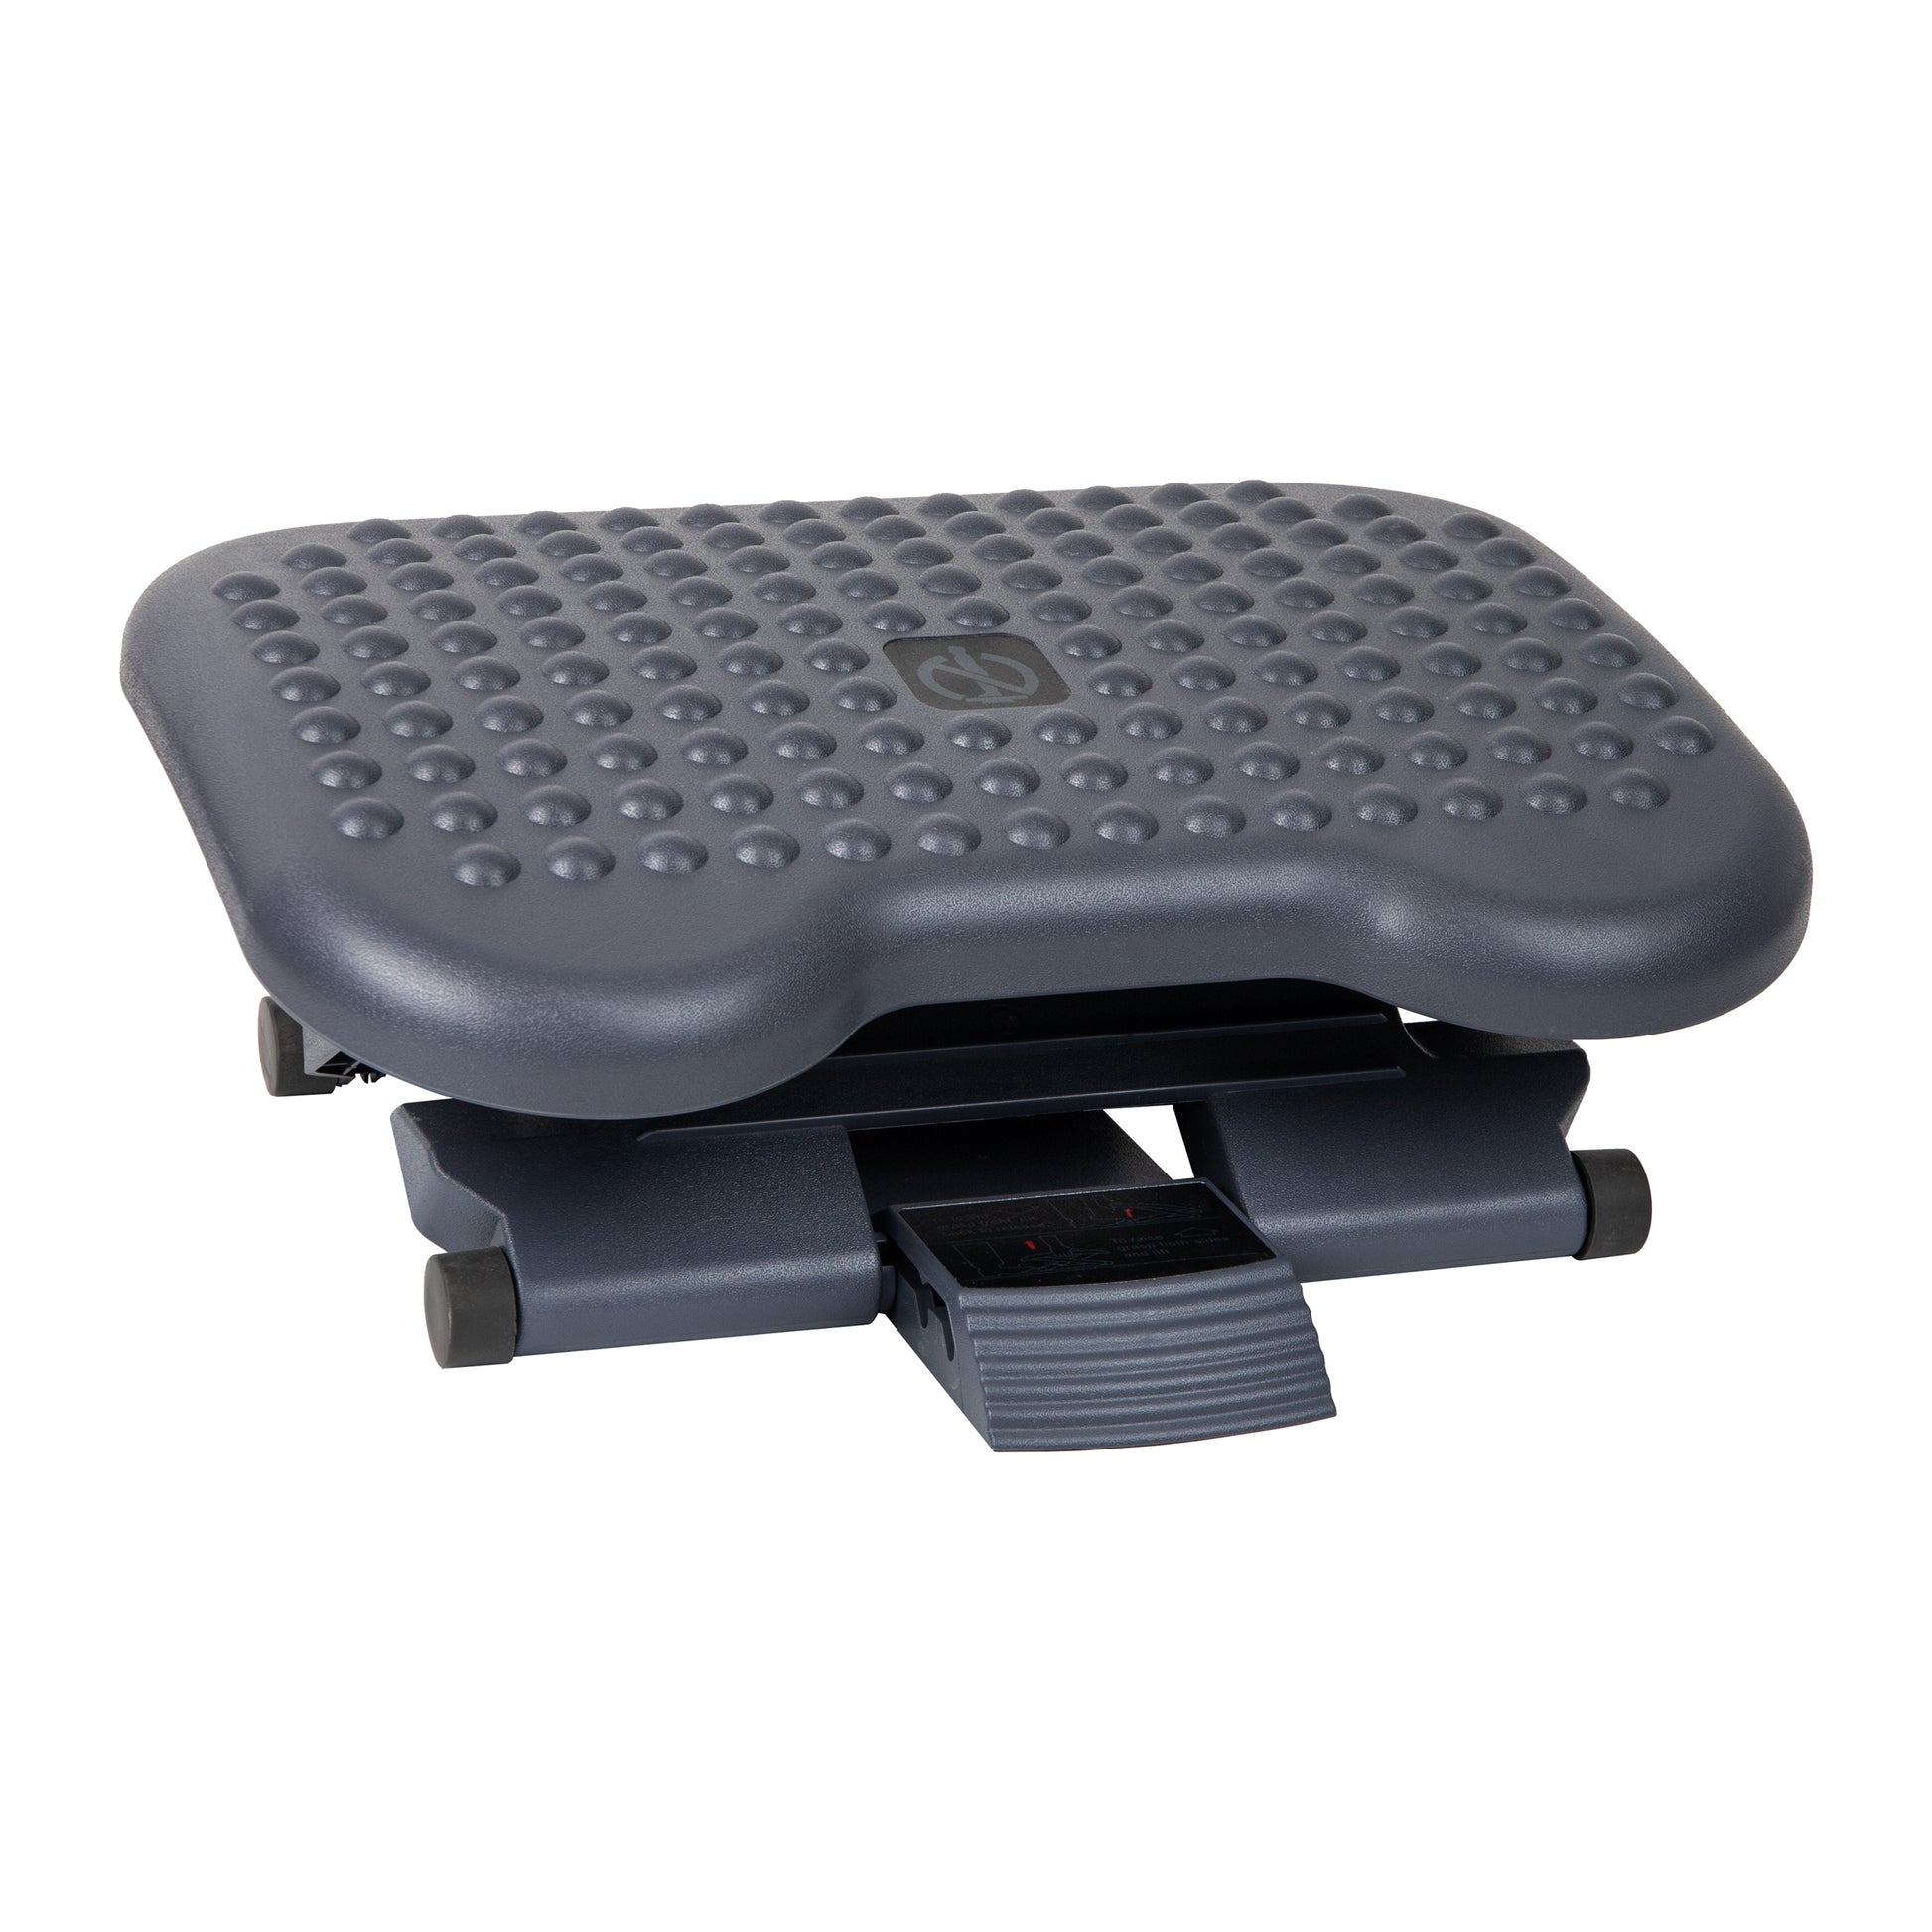 Adjustable Under Desk Footrest - Ergonomic Foot Rest with 3 Height